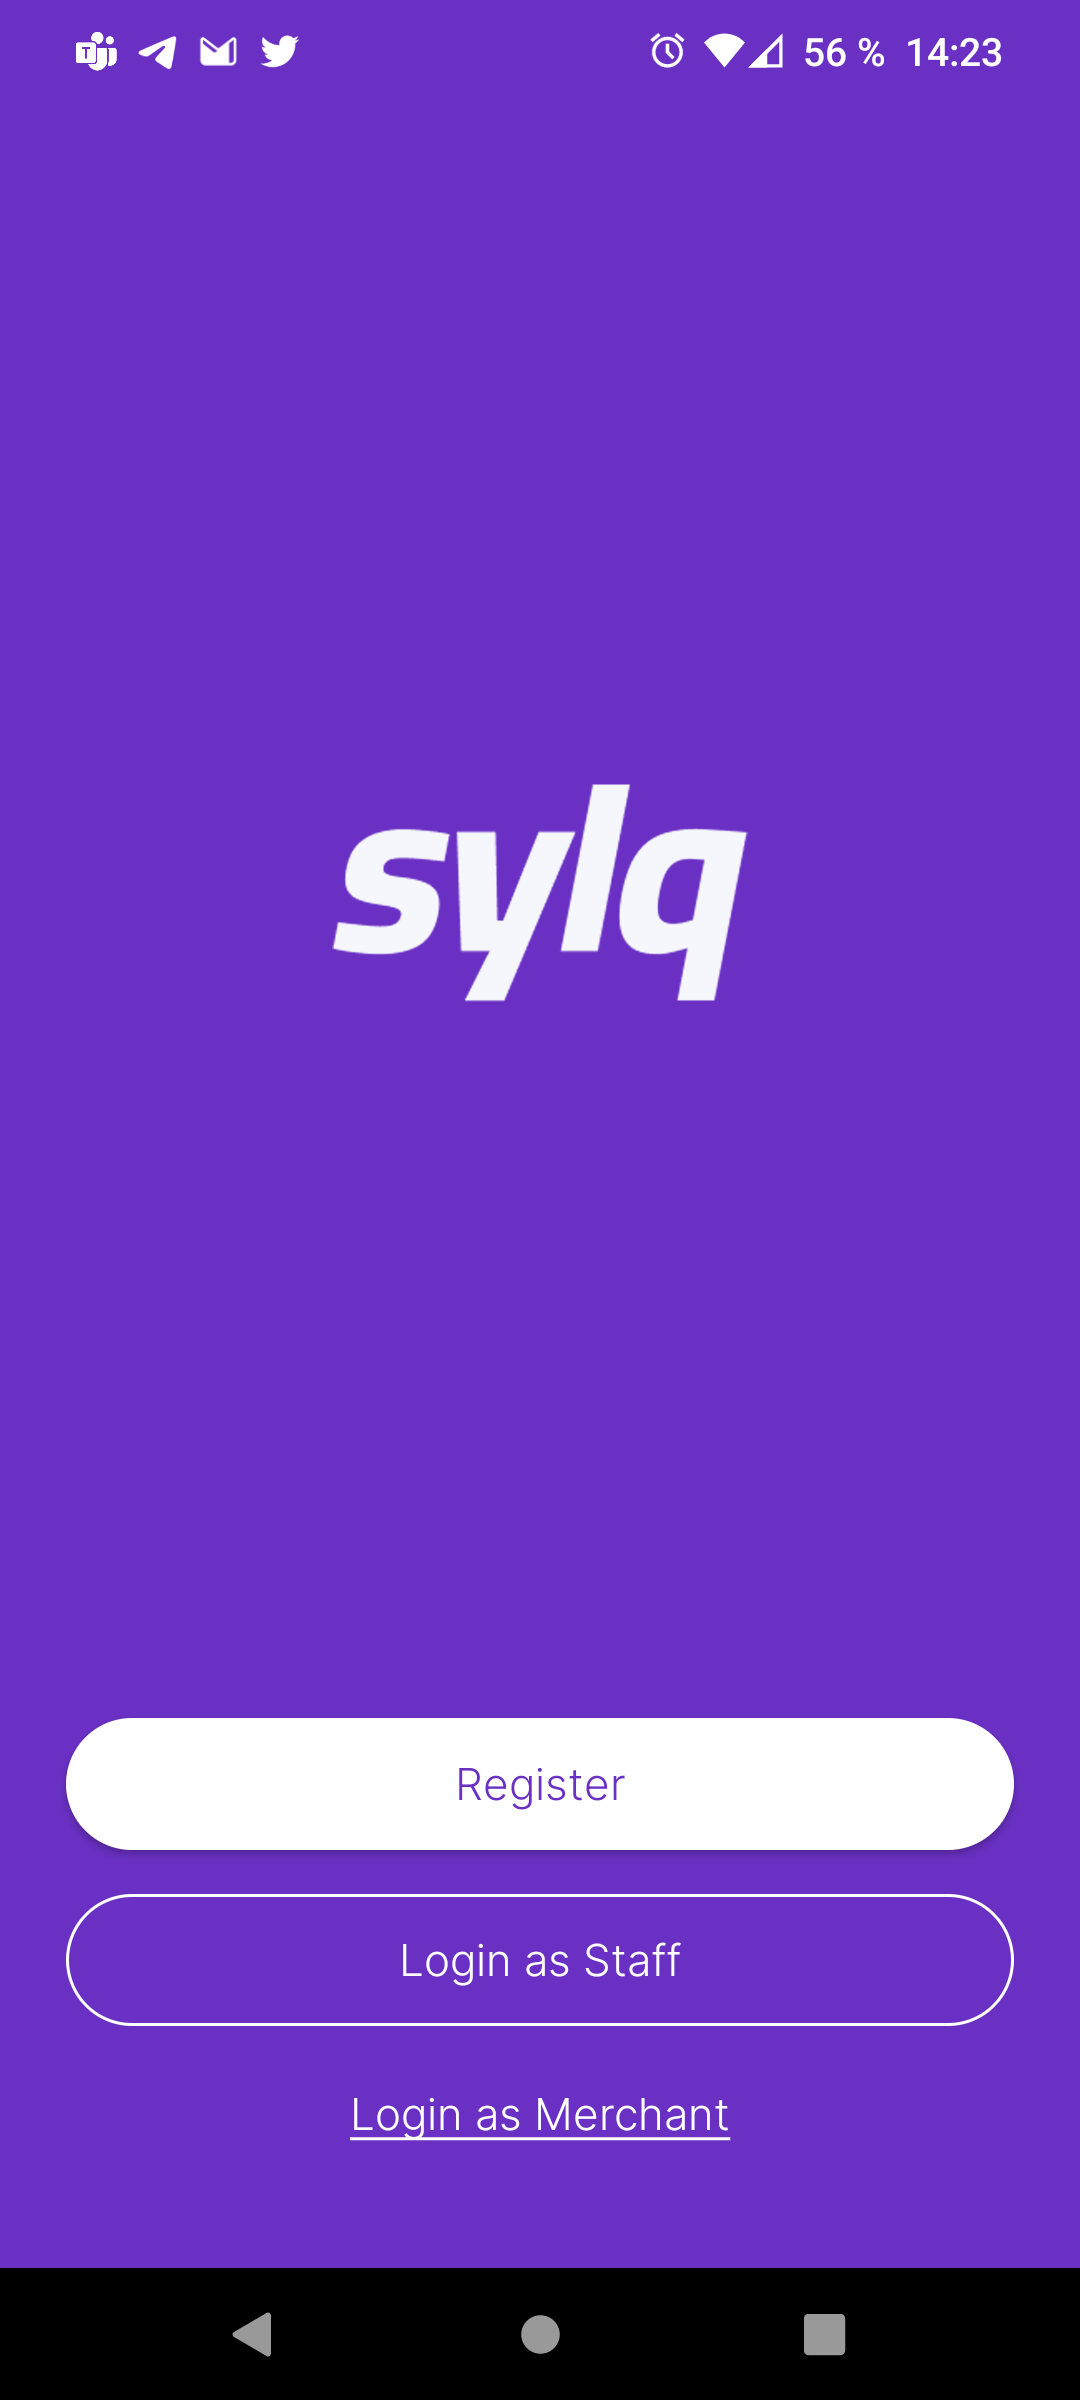 Sylq Main screen